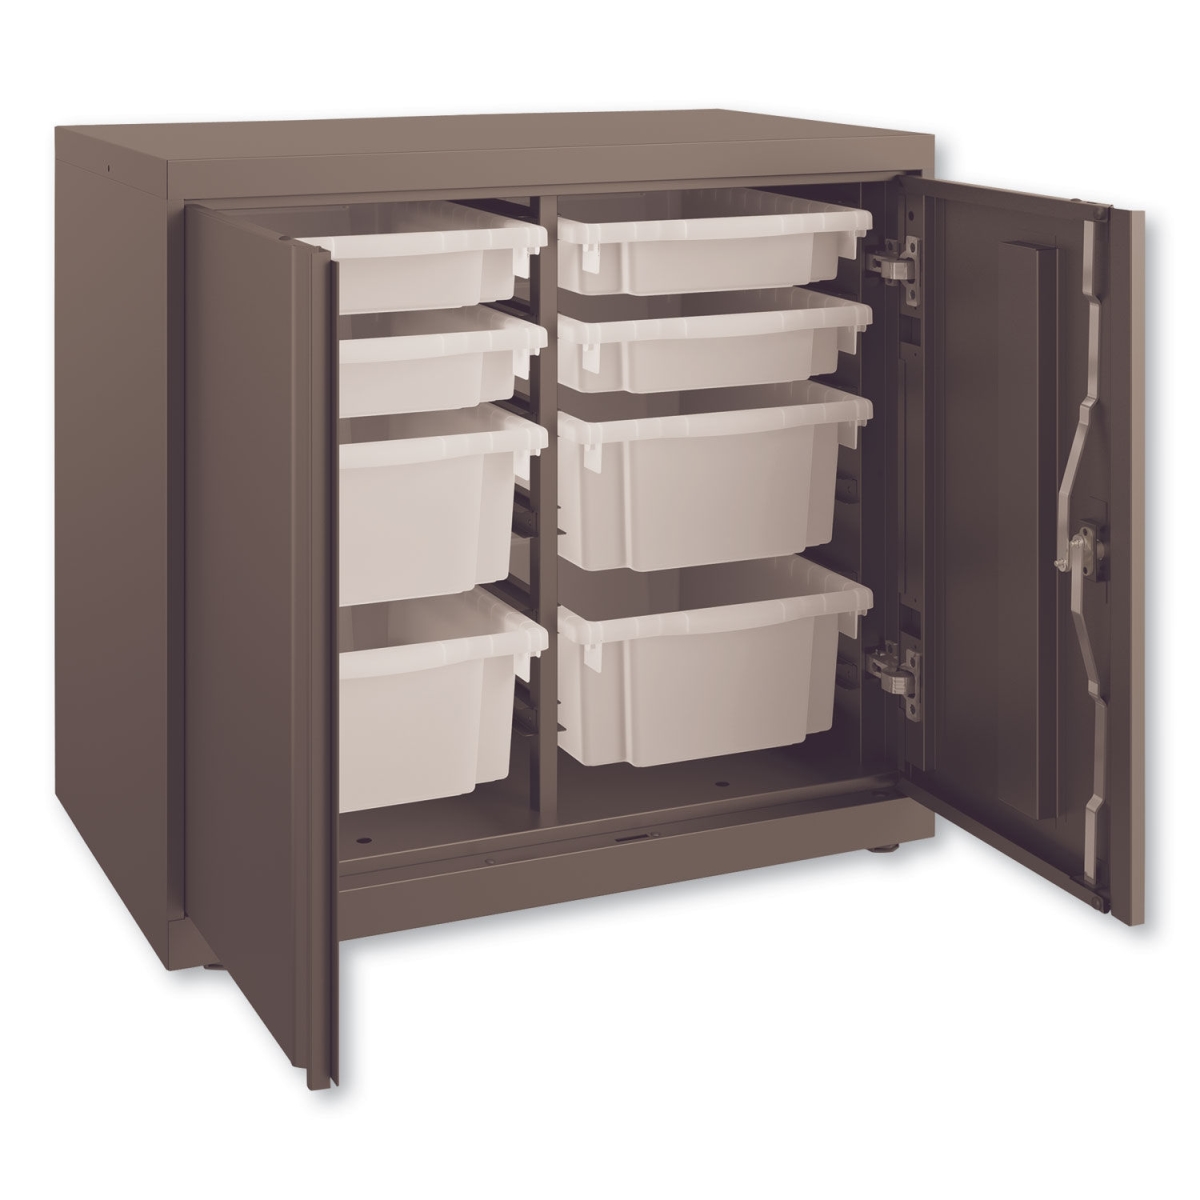 UPC 193492618522 product image for SC182830LGS Modular Storage Cabinet, Charcoal | upcitemdb.com